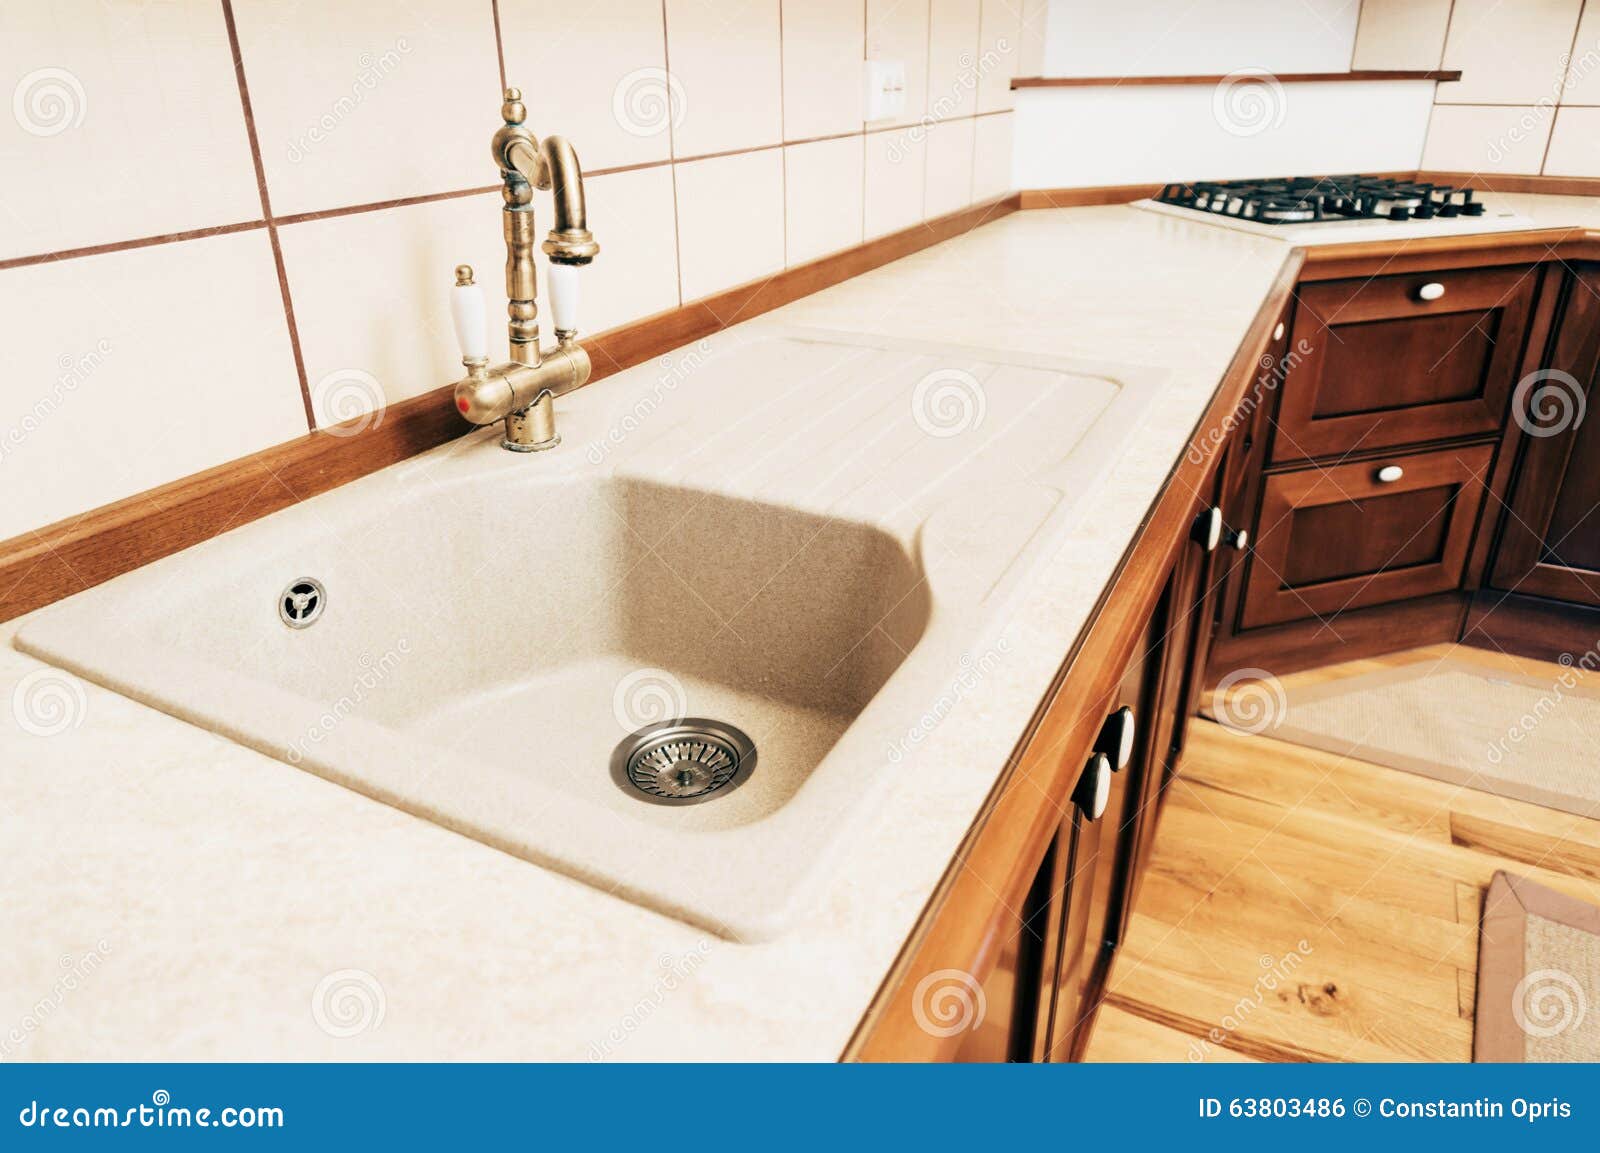 44 inch porcelain kitchen sink top